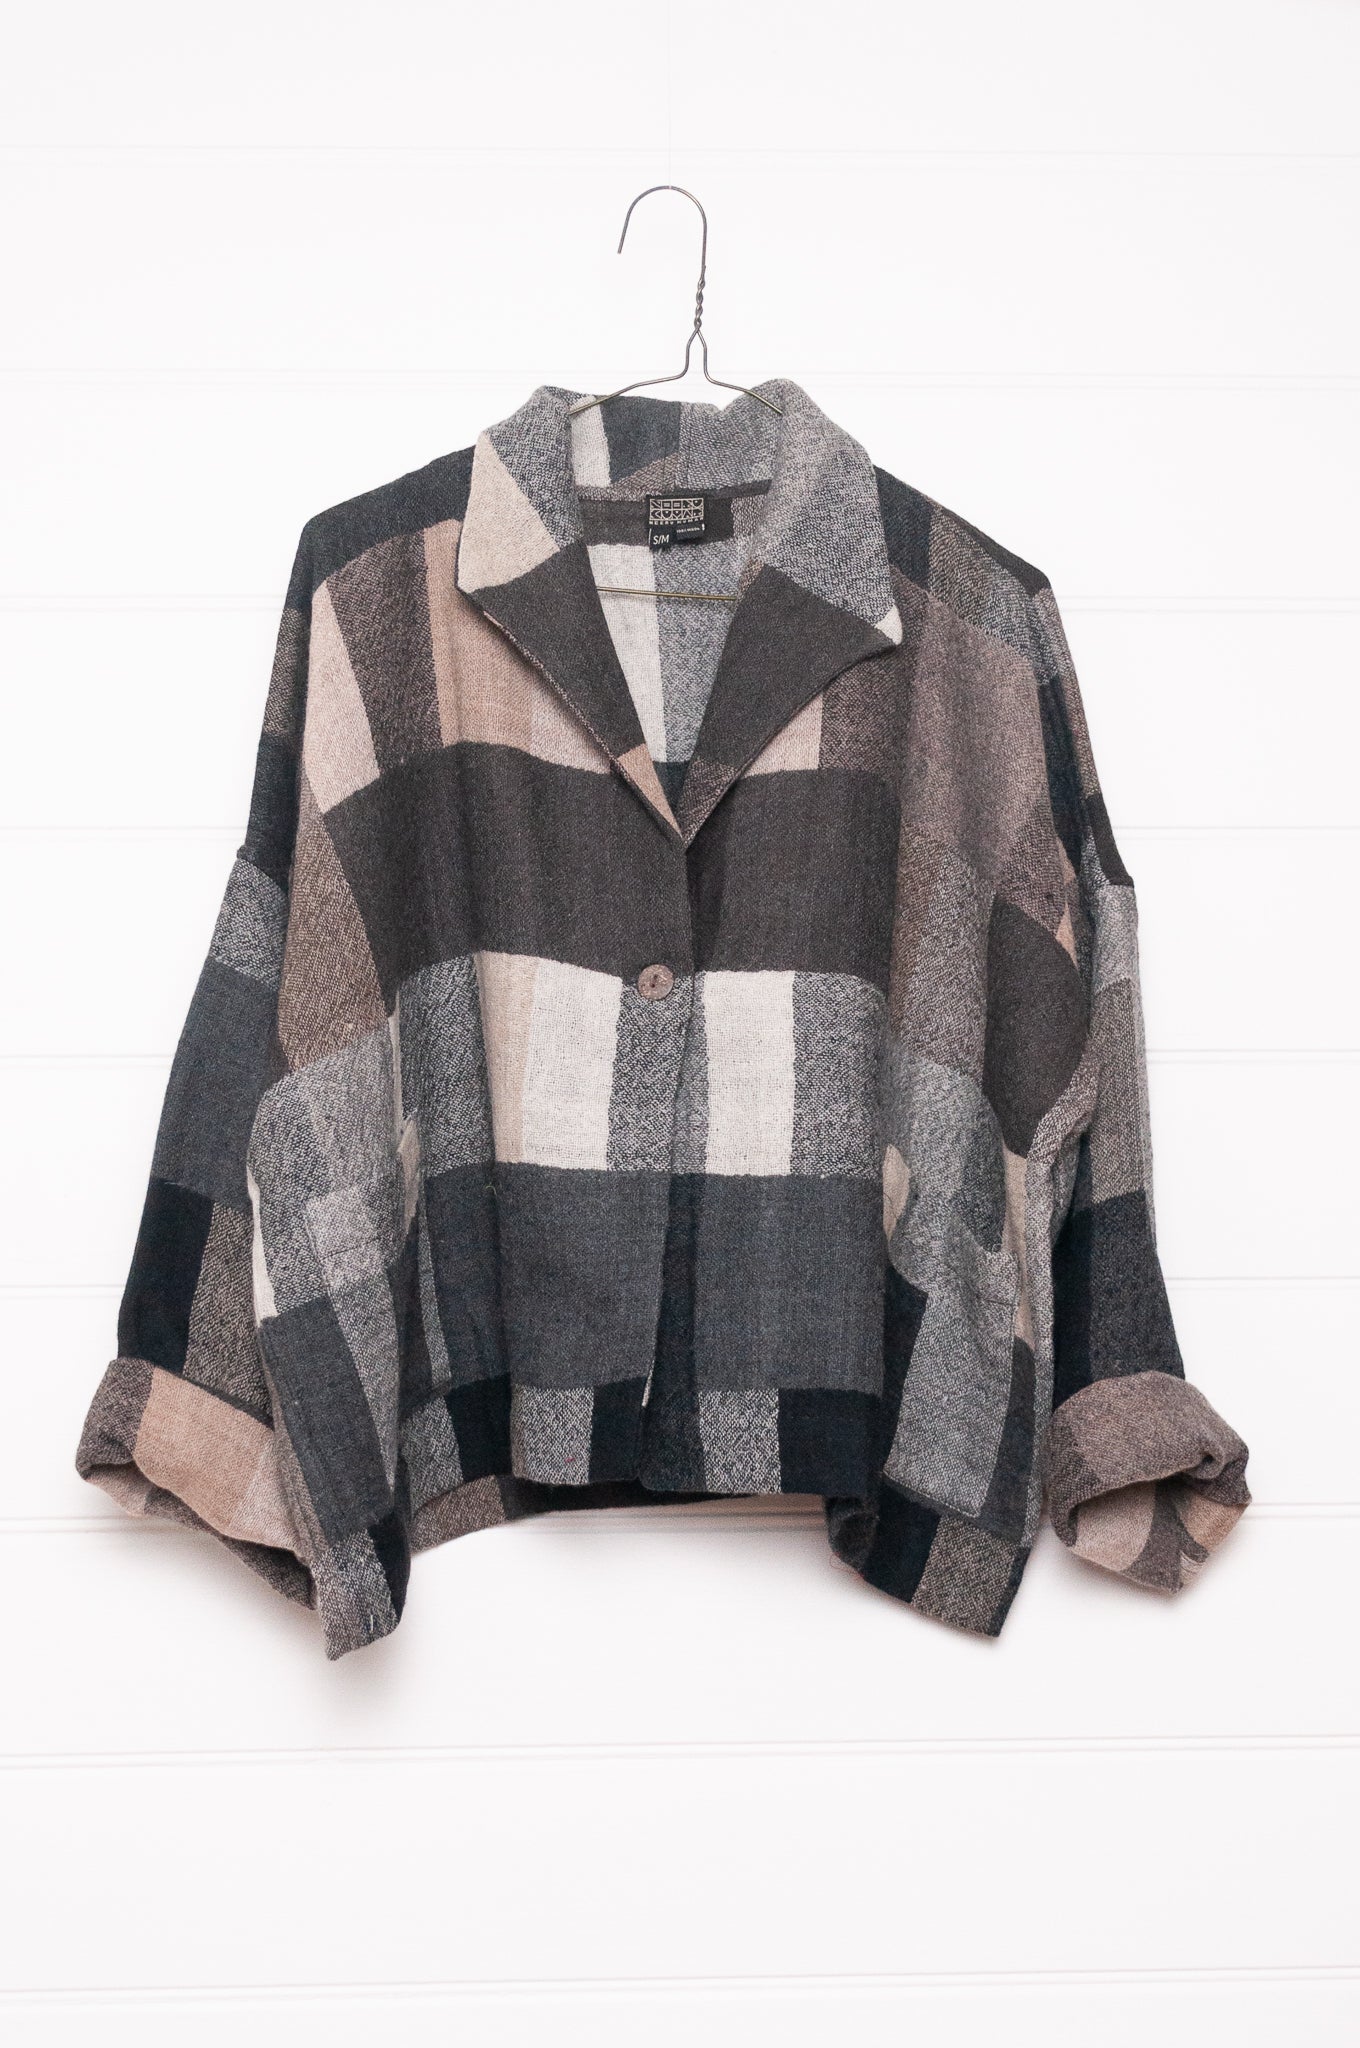 Neeru Kumar Coco jacket in blanket check wool, monochrome tones of charcoal, black, beige, latte and brown.